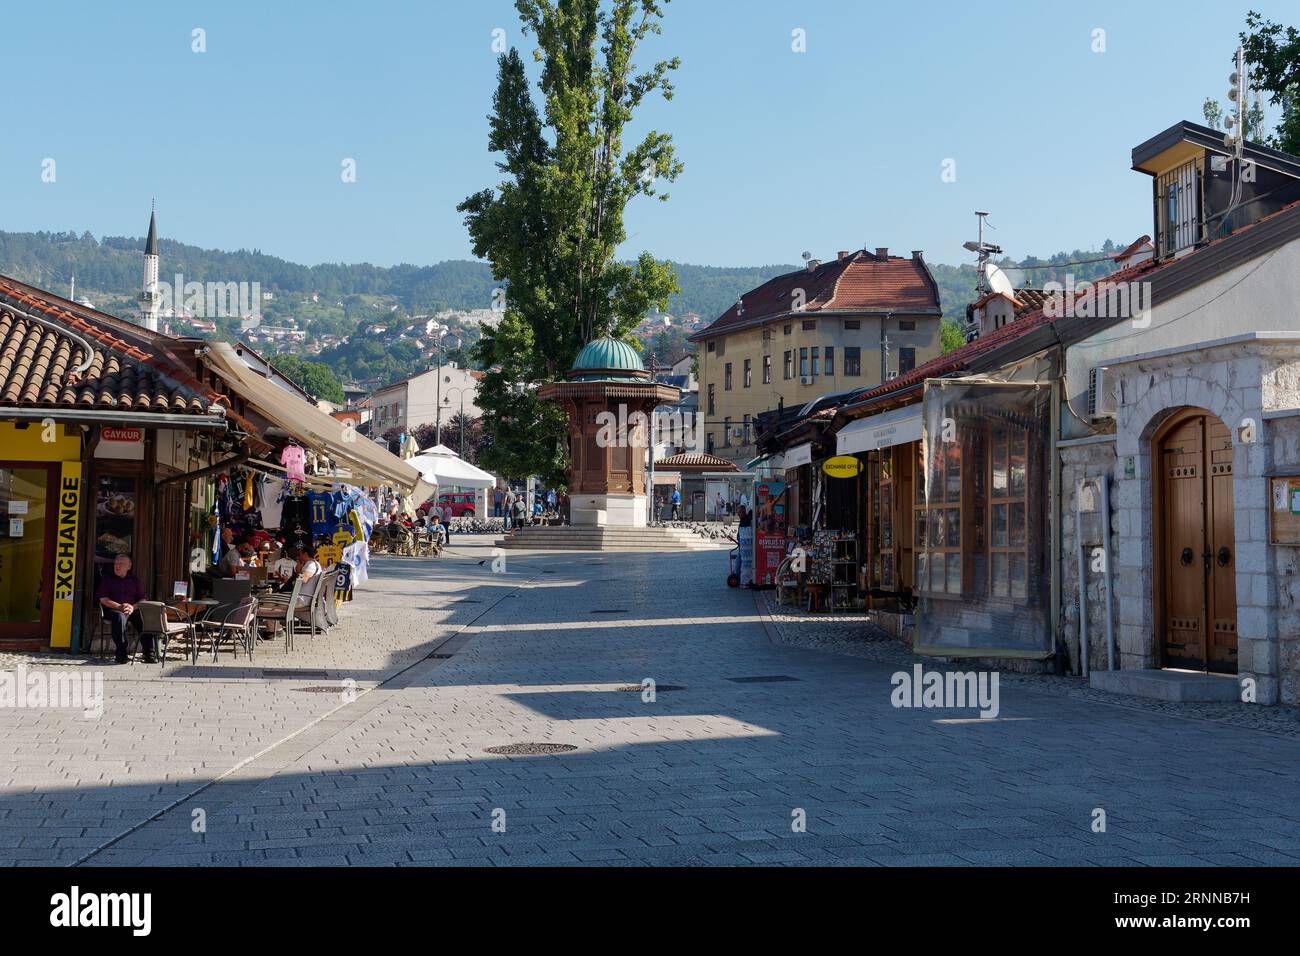 The Sebilj, an Ottoman-style wooden fountain in the Baščaršija neighbourhood in the city of Sarajevo, Bosnia and Herzegovina, September 02, 2023 Stock Photo